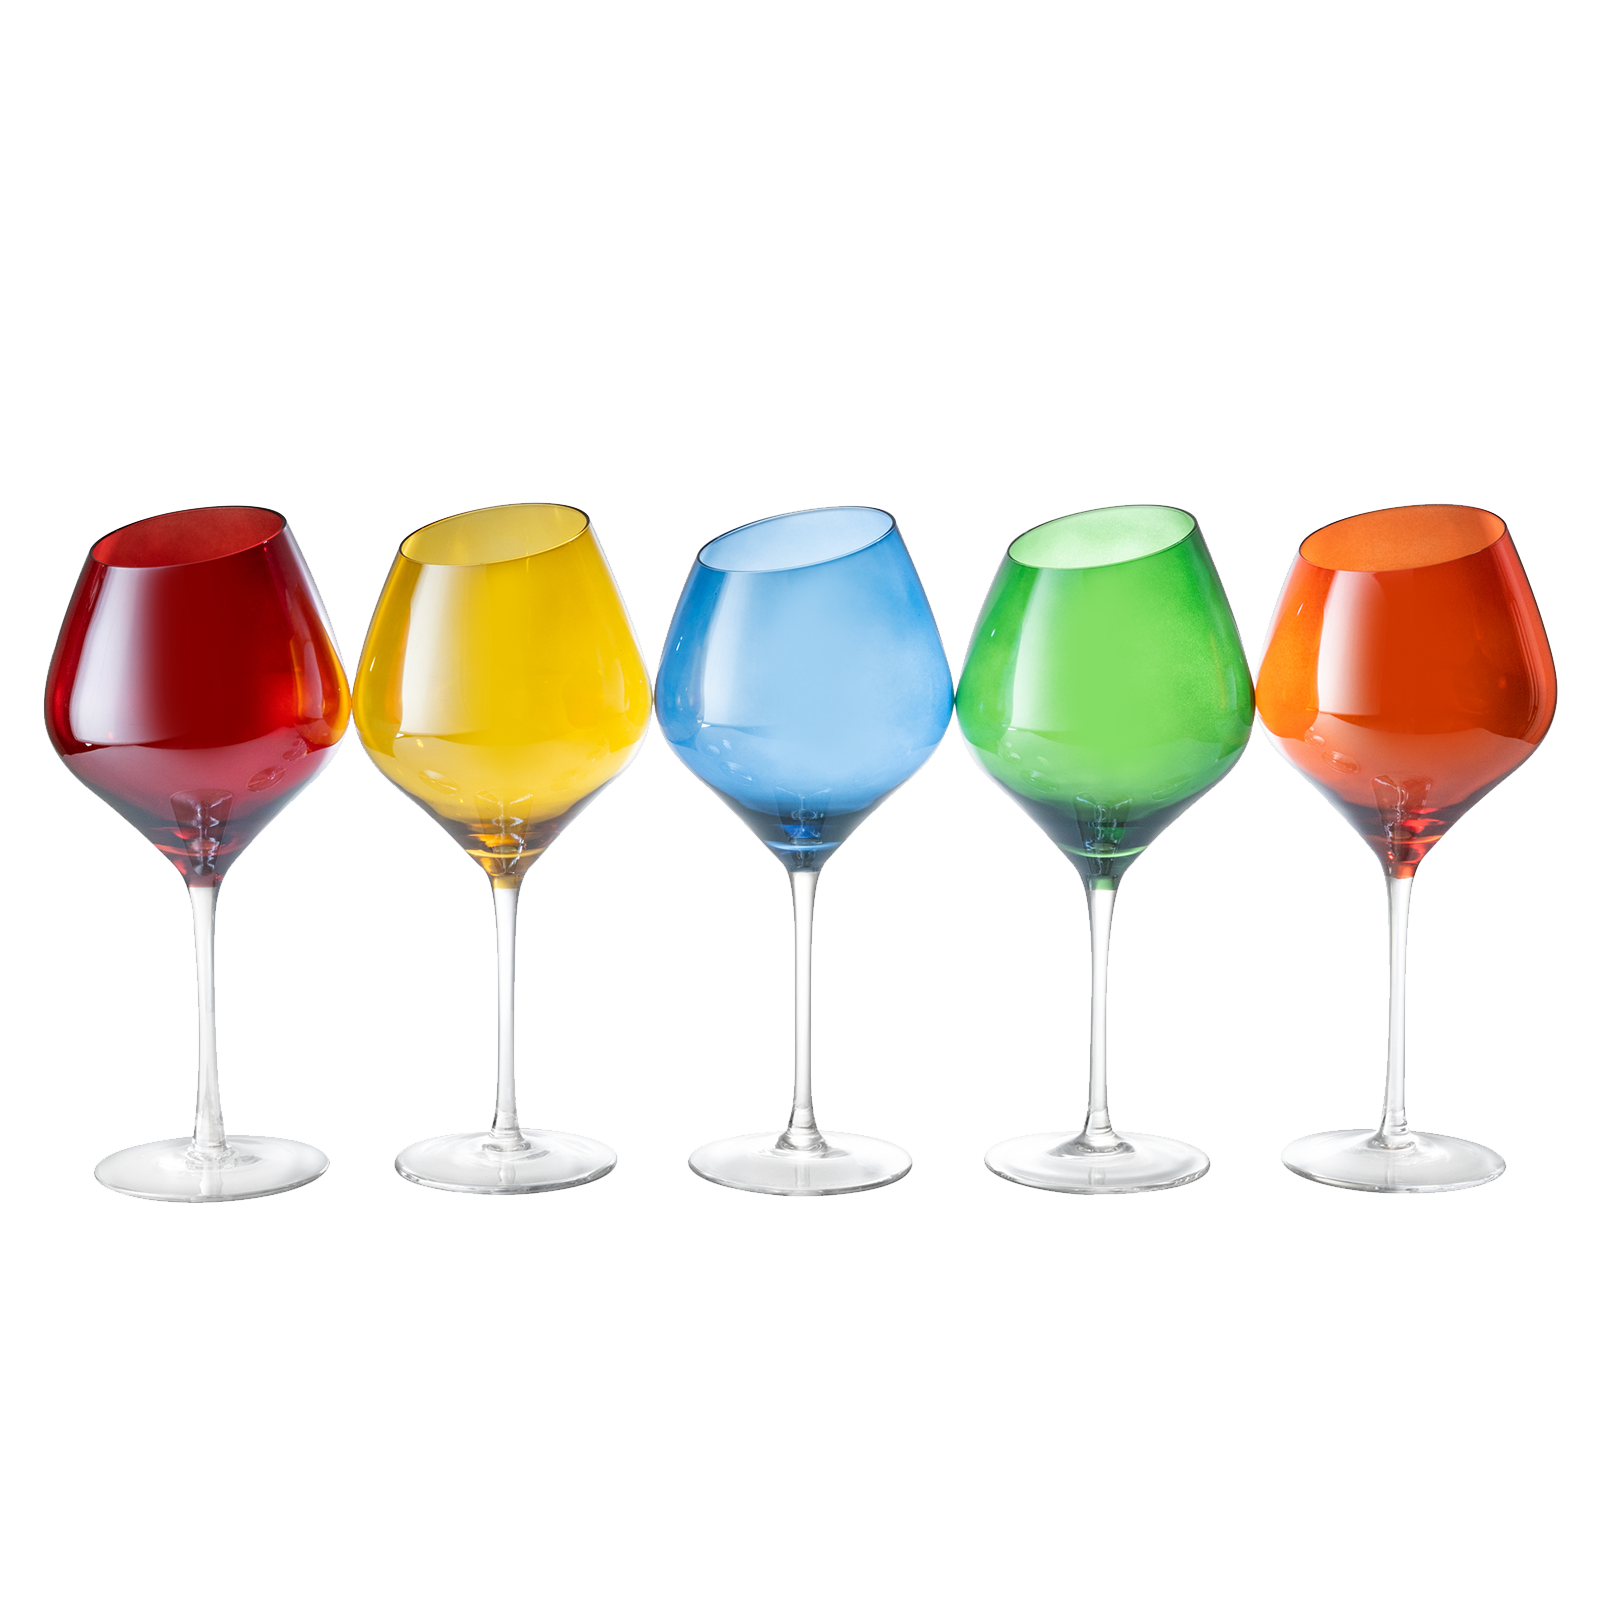 Slanted Rim Colored Wine Glasses By The Wine Savant Set Of 5 Stylish